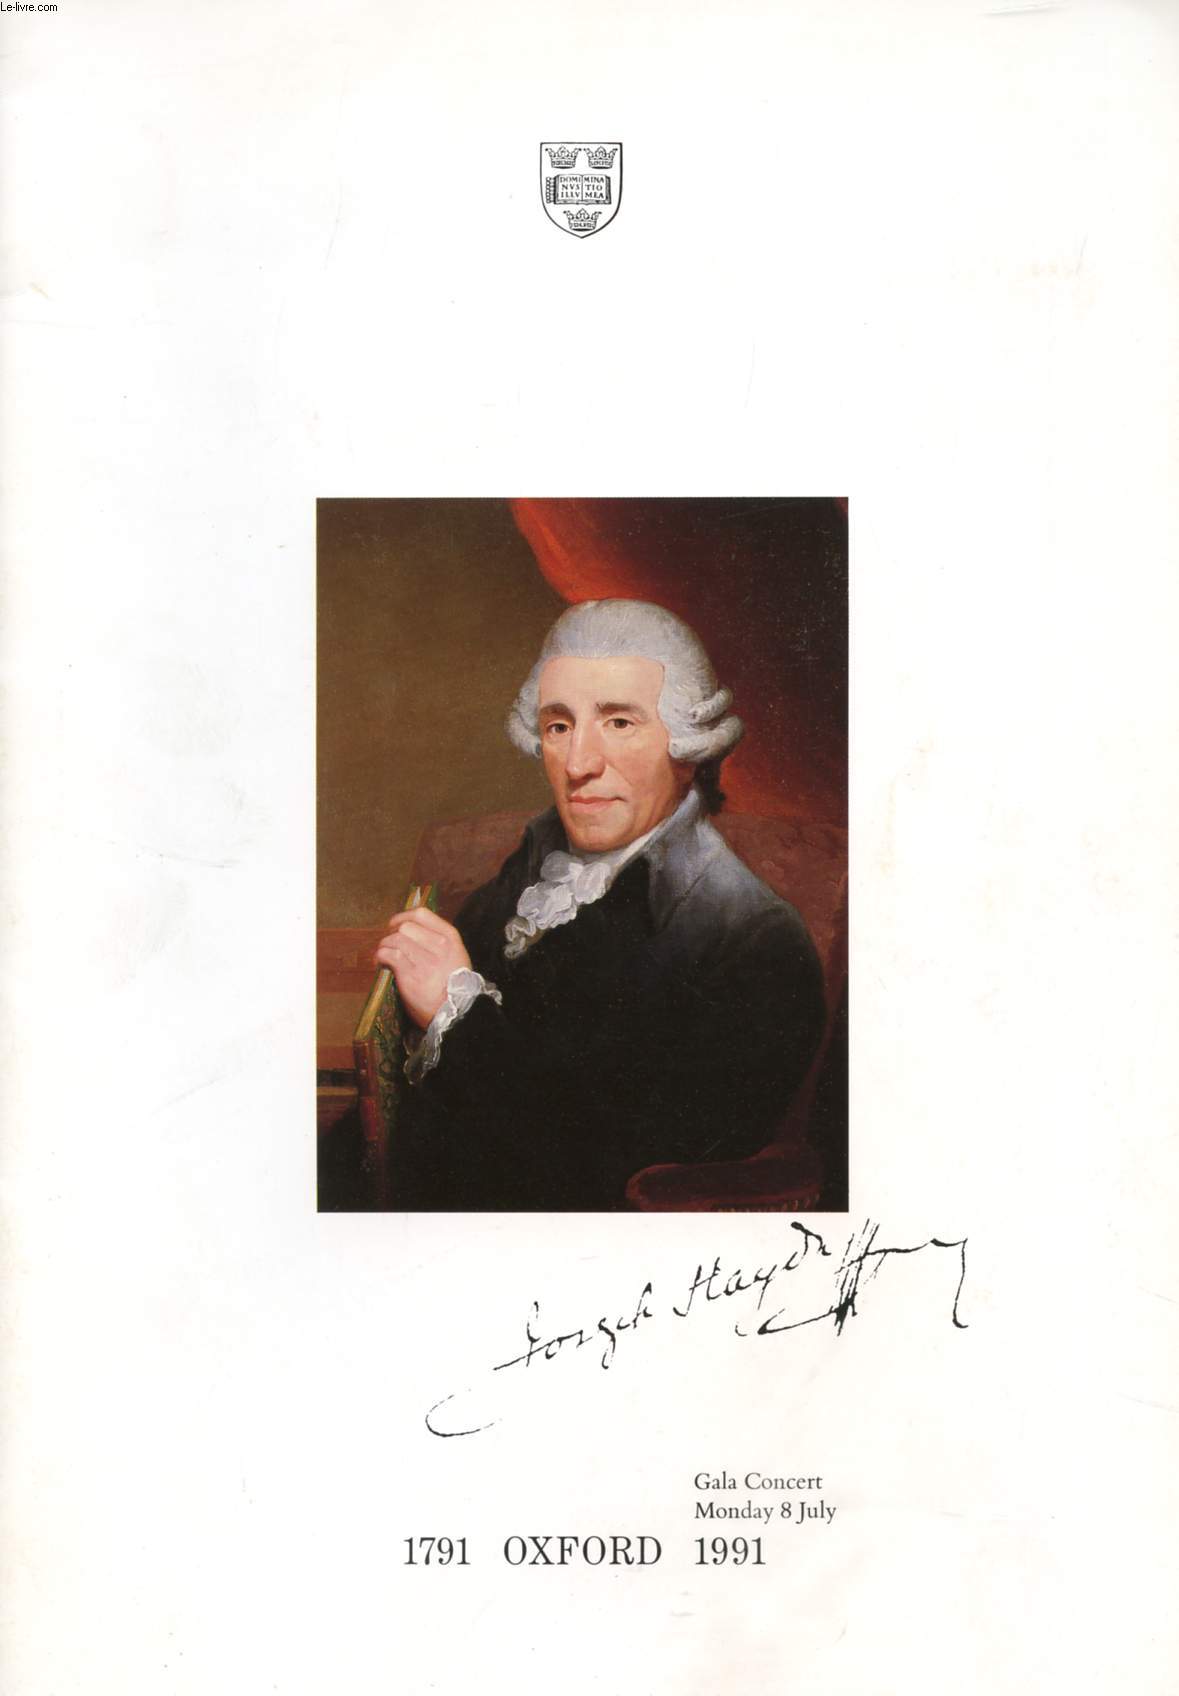 JOSEPH HAYDN, 1791 OXFORD 1991, GALA CONCERT (PROGRAMME)